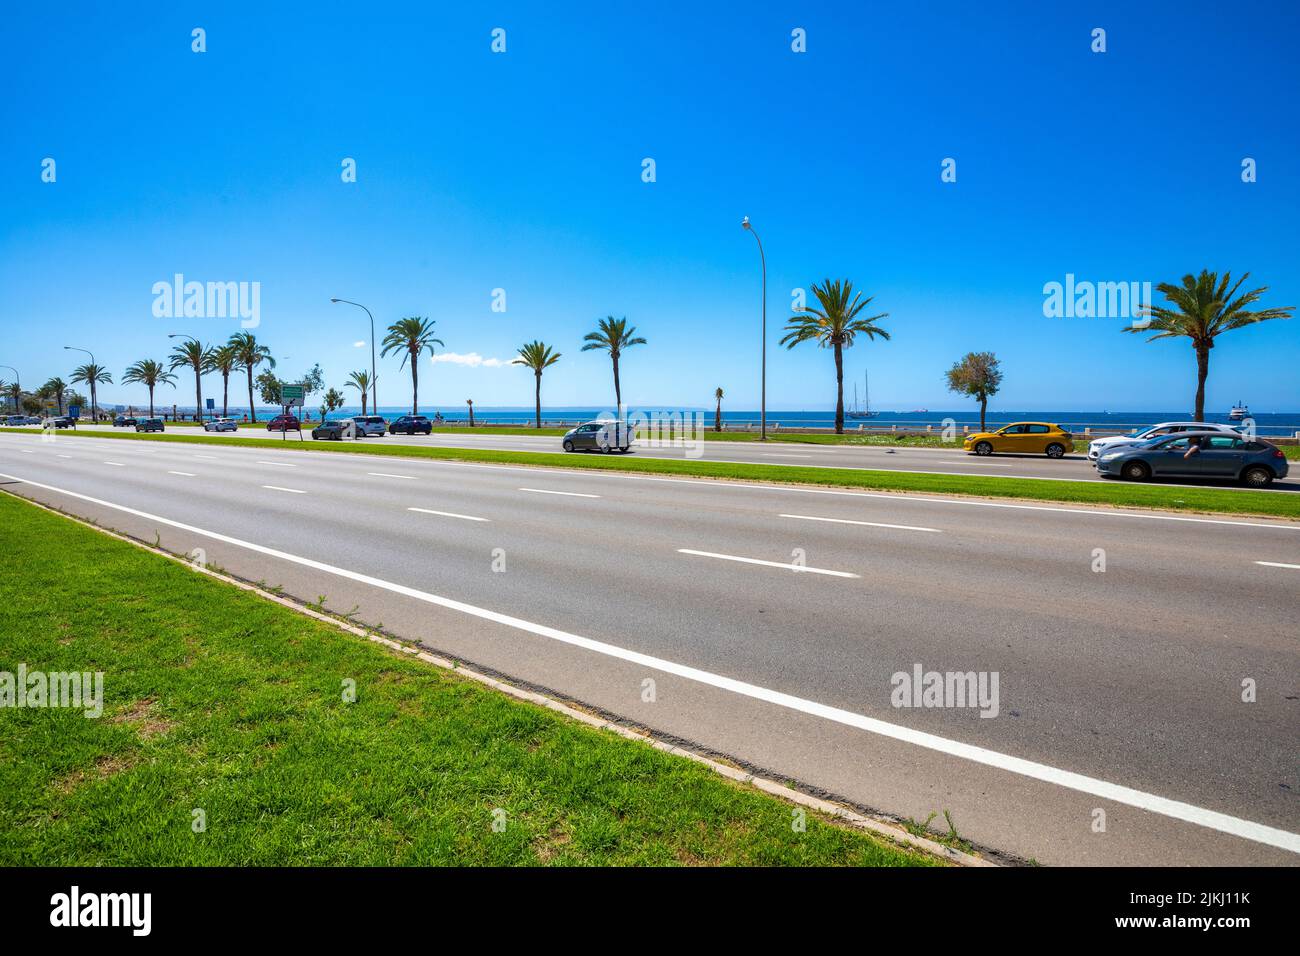 Spain, Balearic islands, Mallorca, Palma. The promenade with palm trees along the Autopista de Llevant, fast scrolling road in Palma de Mallorca Stock Photo